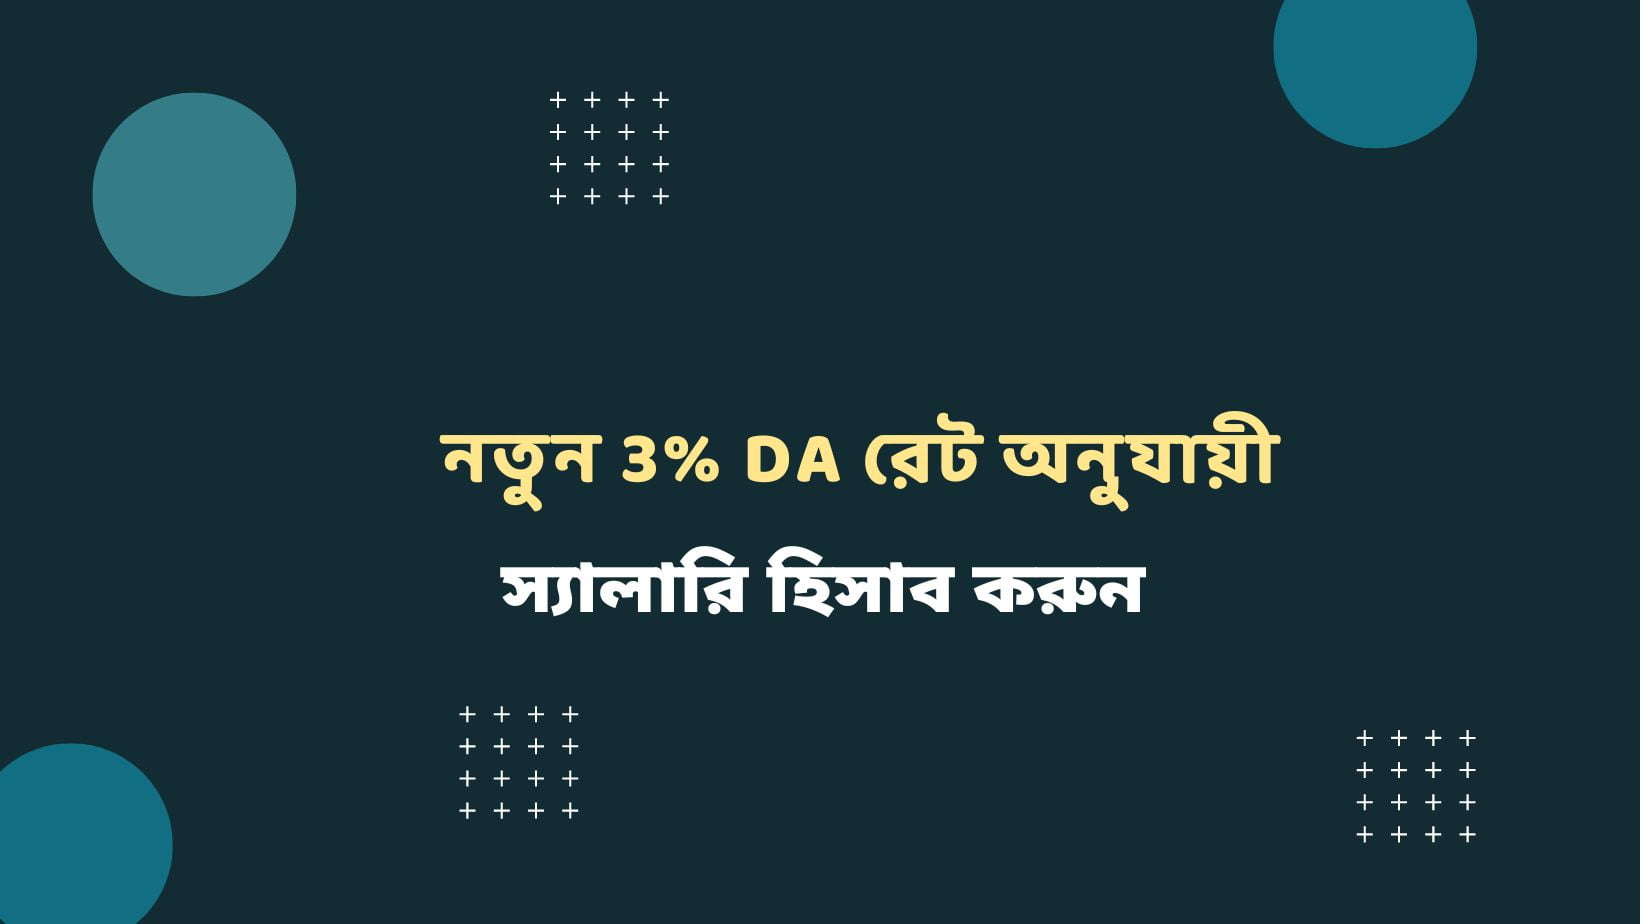 Salary Calculator with additional 3% DA for WB